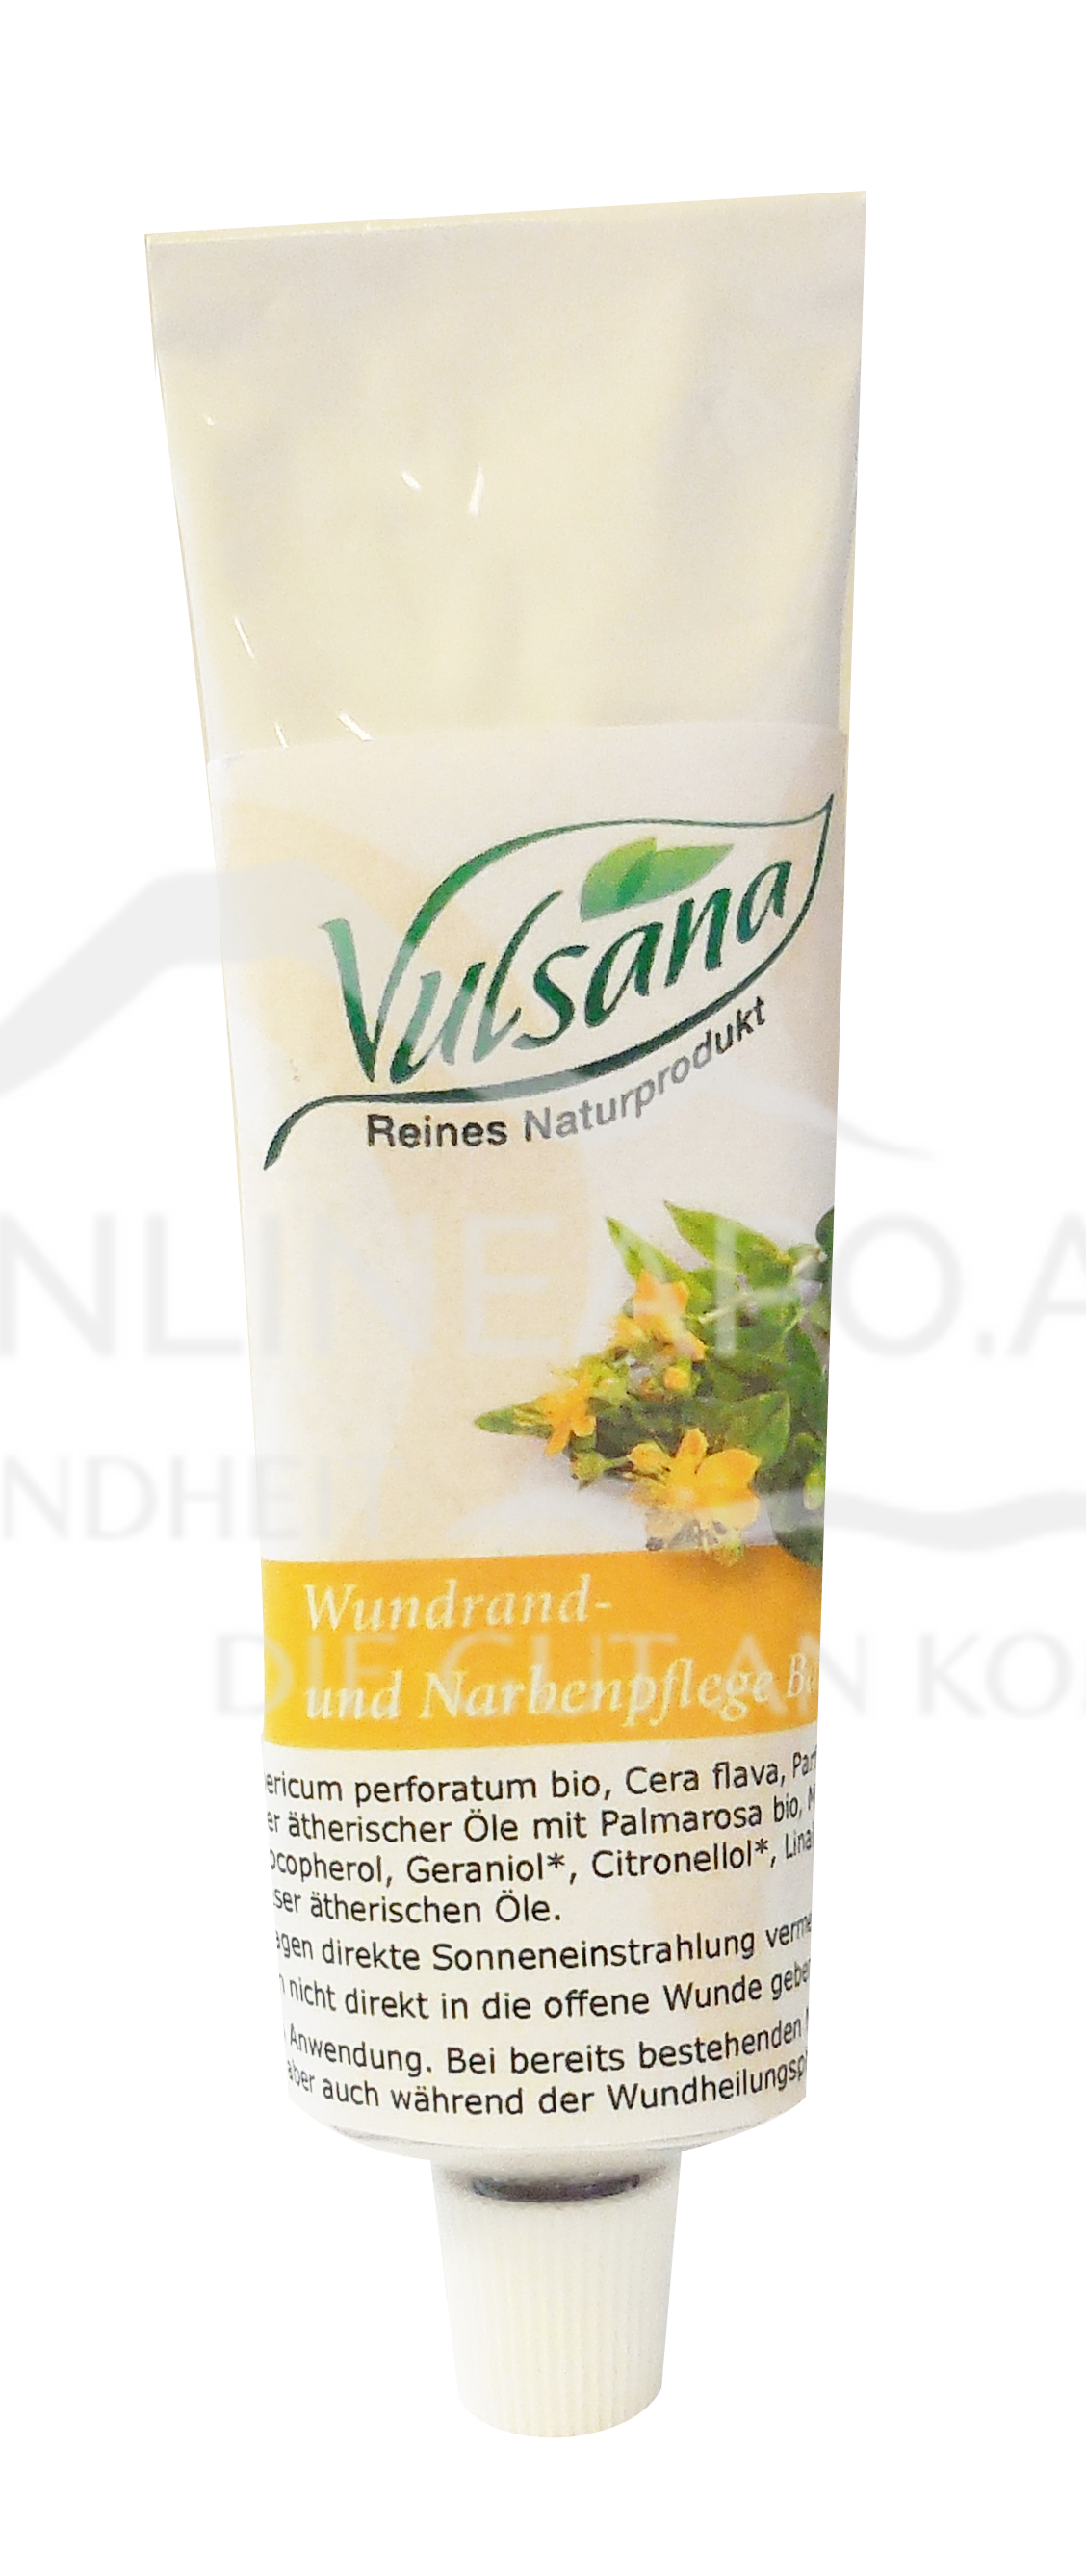 Vulsana Wundrand- und Narbenpflege